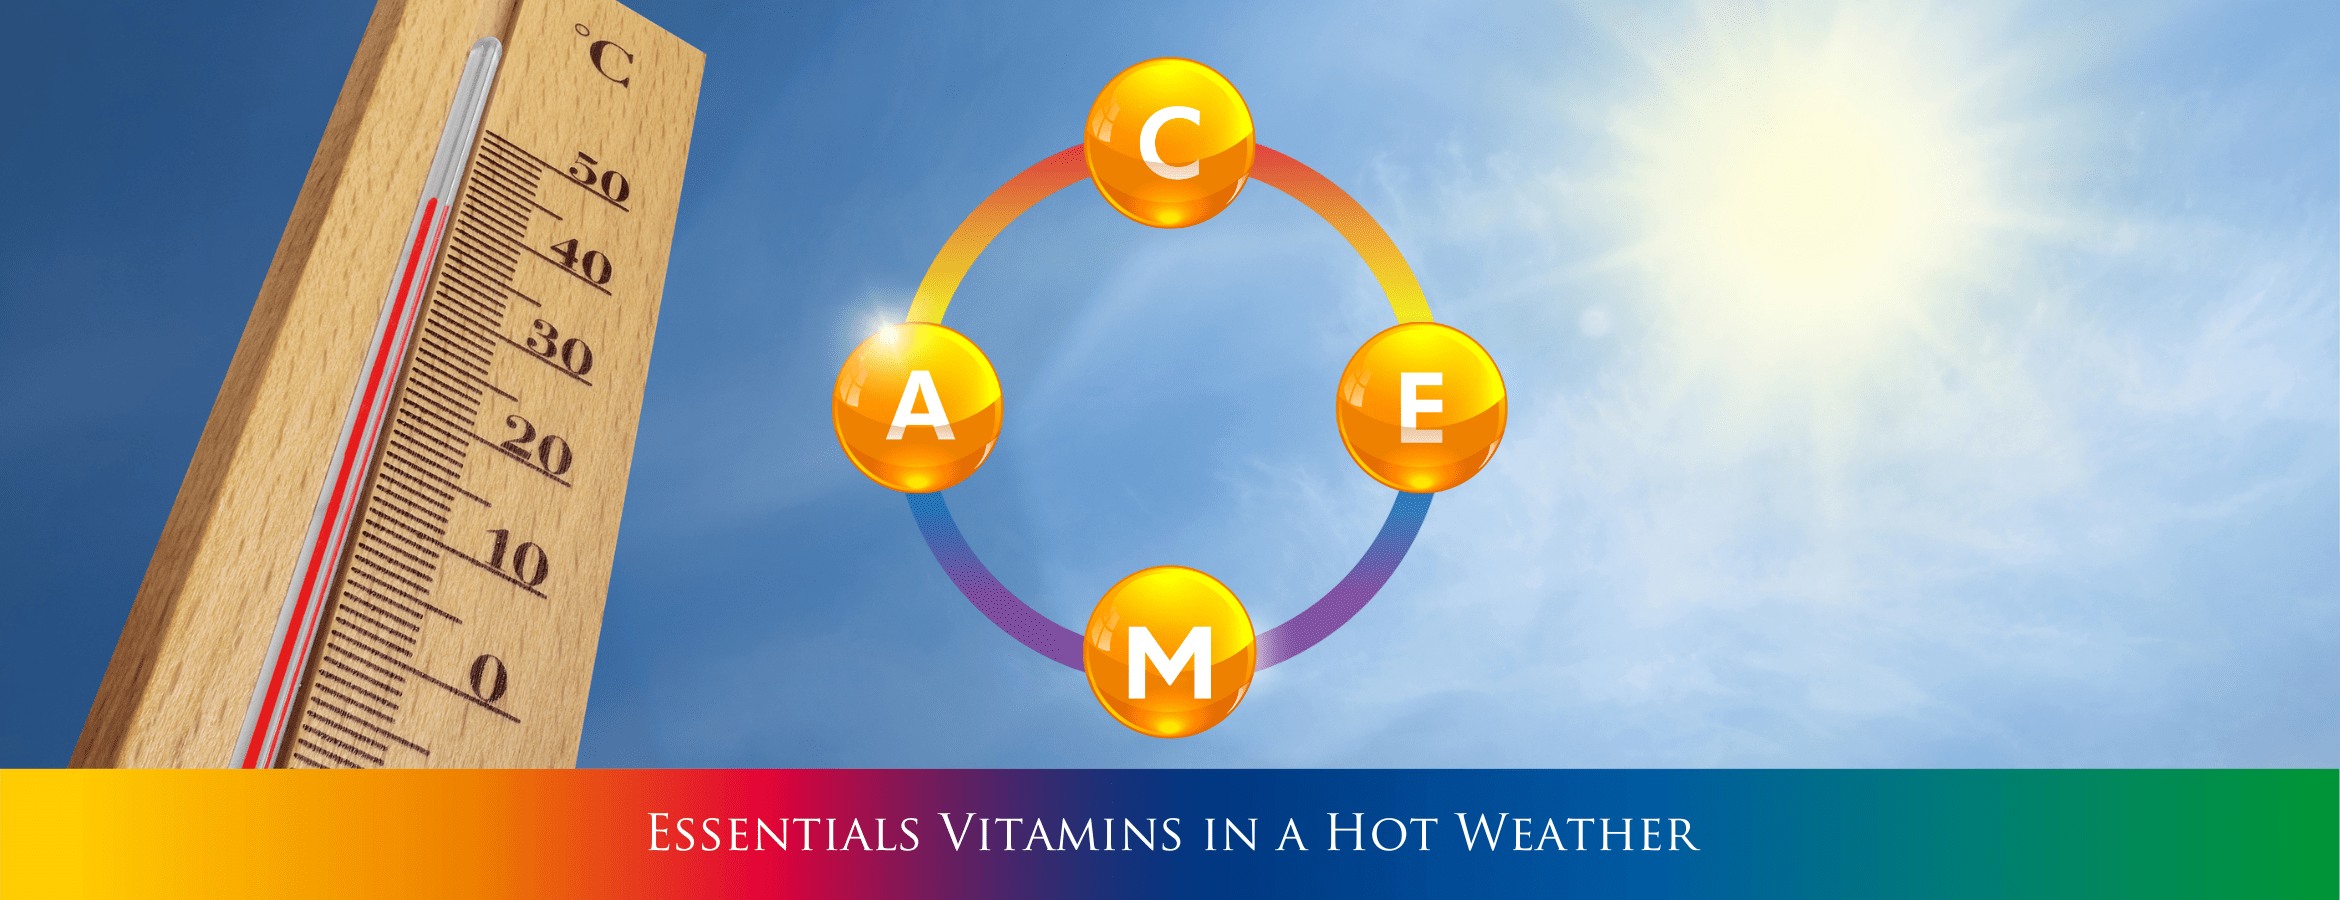 Essentials Vitamins in a Hot Weather